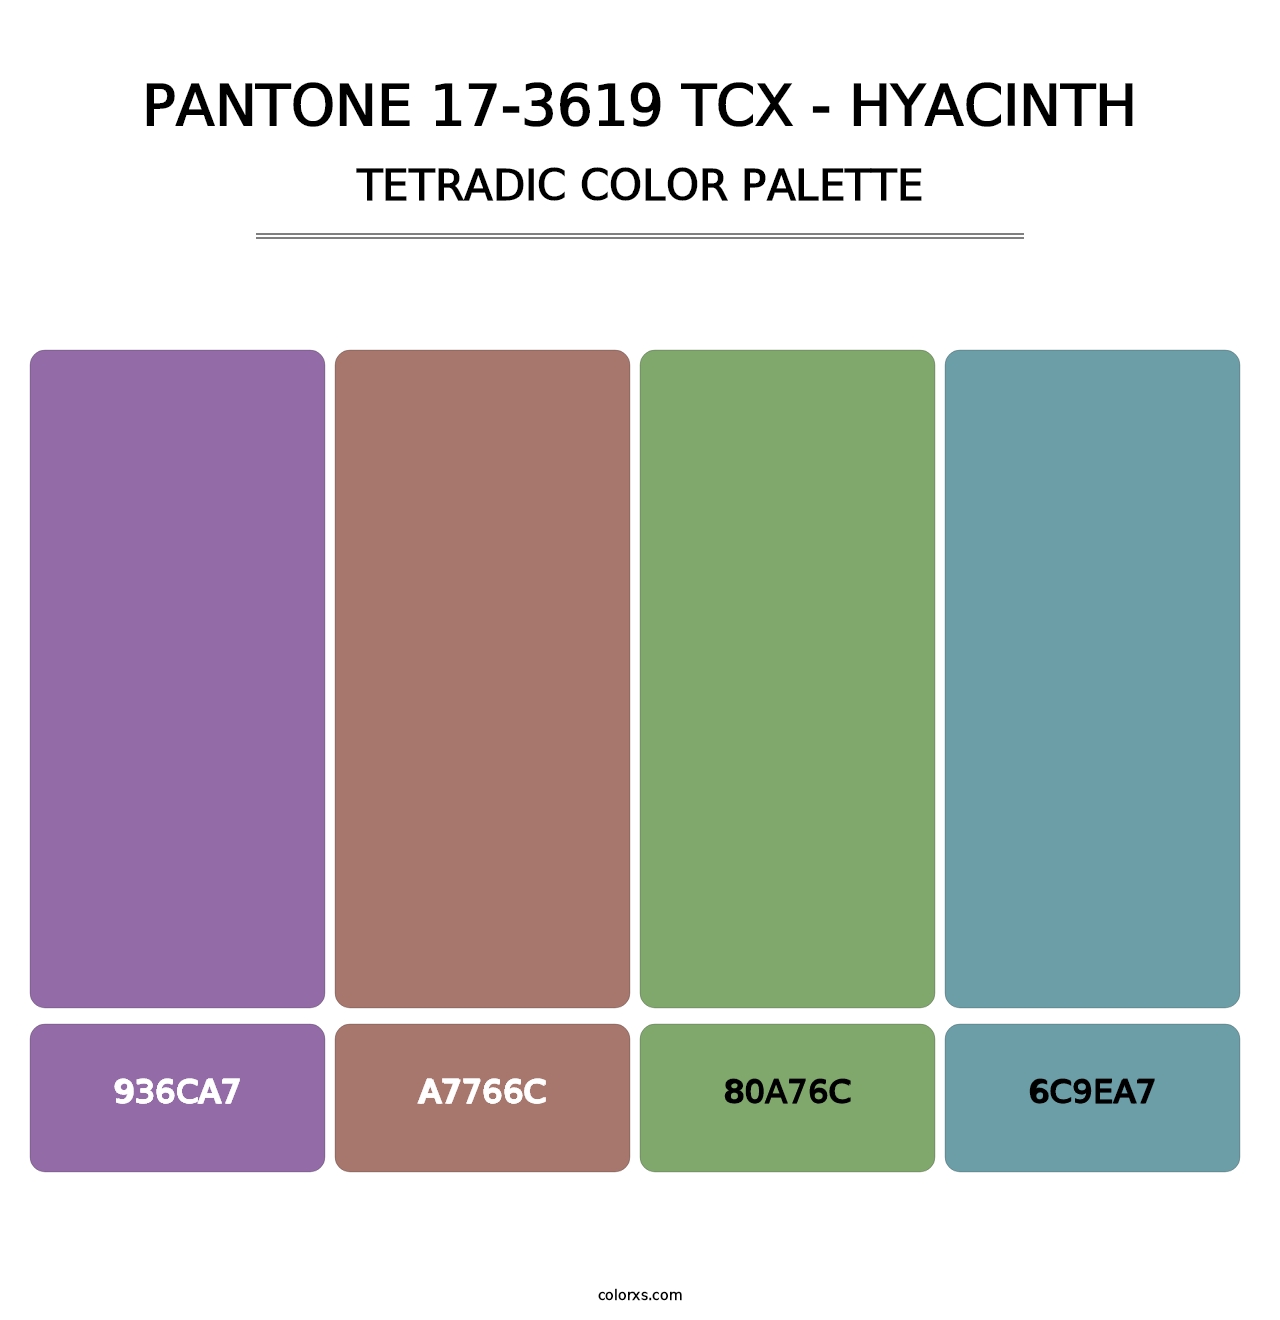 PANTONE 17-3619 TCX - Hyacinth - Tetradic Color Palette